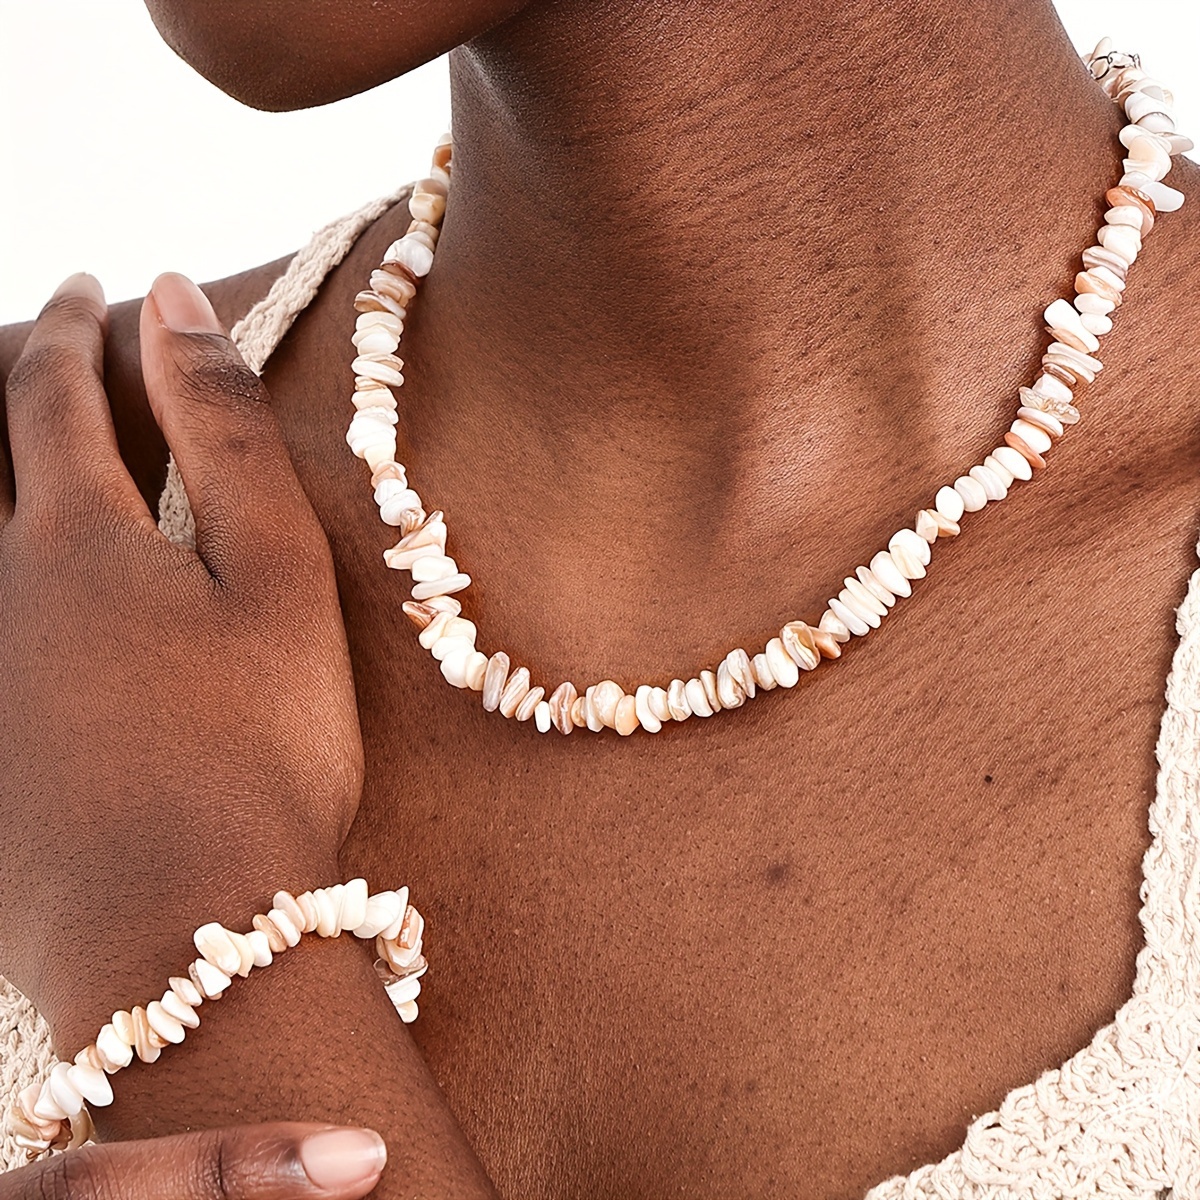 

Natural Irregular Shell Bead Necklace And Bracelet Set, Summer Beach Fashionable Style, Minimalist Black Elegant Jewelry, Adjustable Clasp Closure For Women